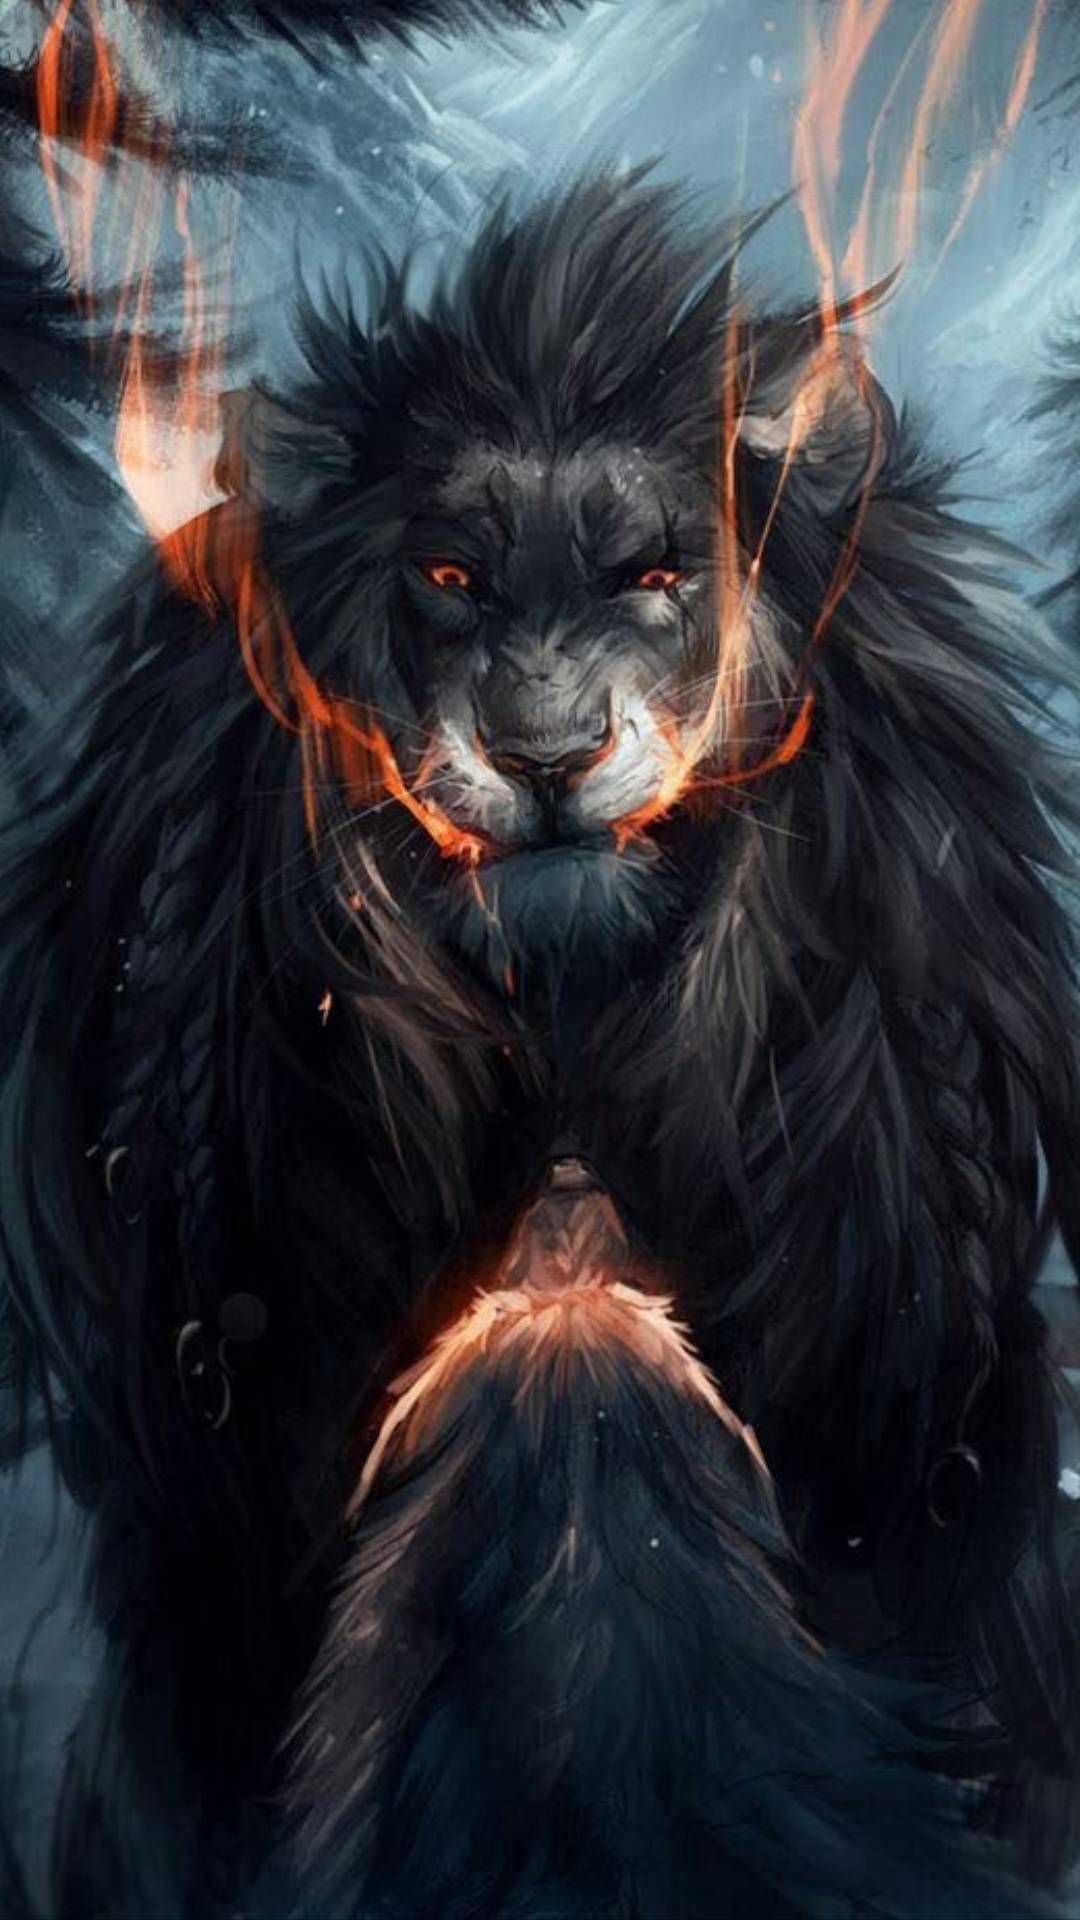 Lion vs Wolf iPhone Wallpaper. Lion art, Dark fantasy art, Mythical creatures art